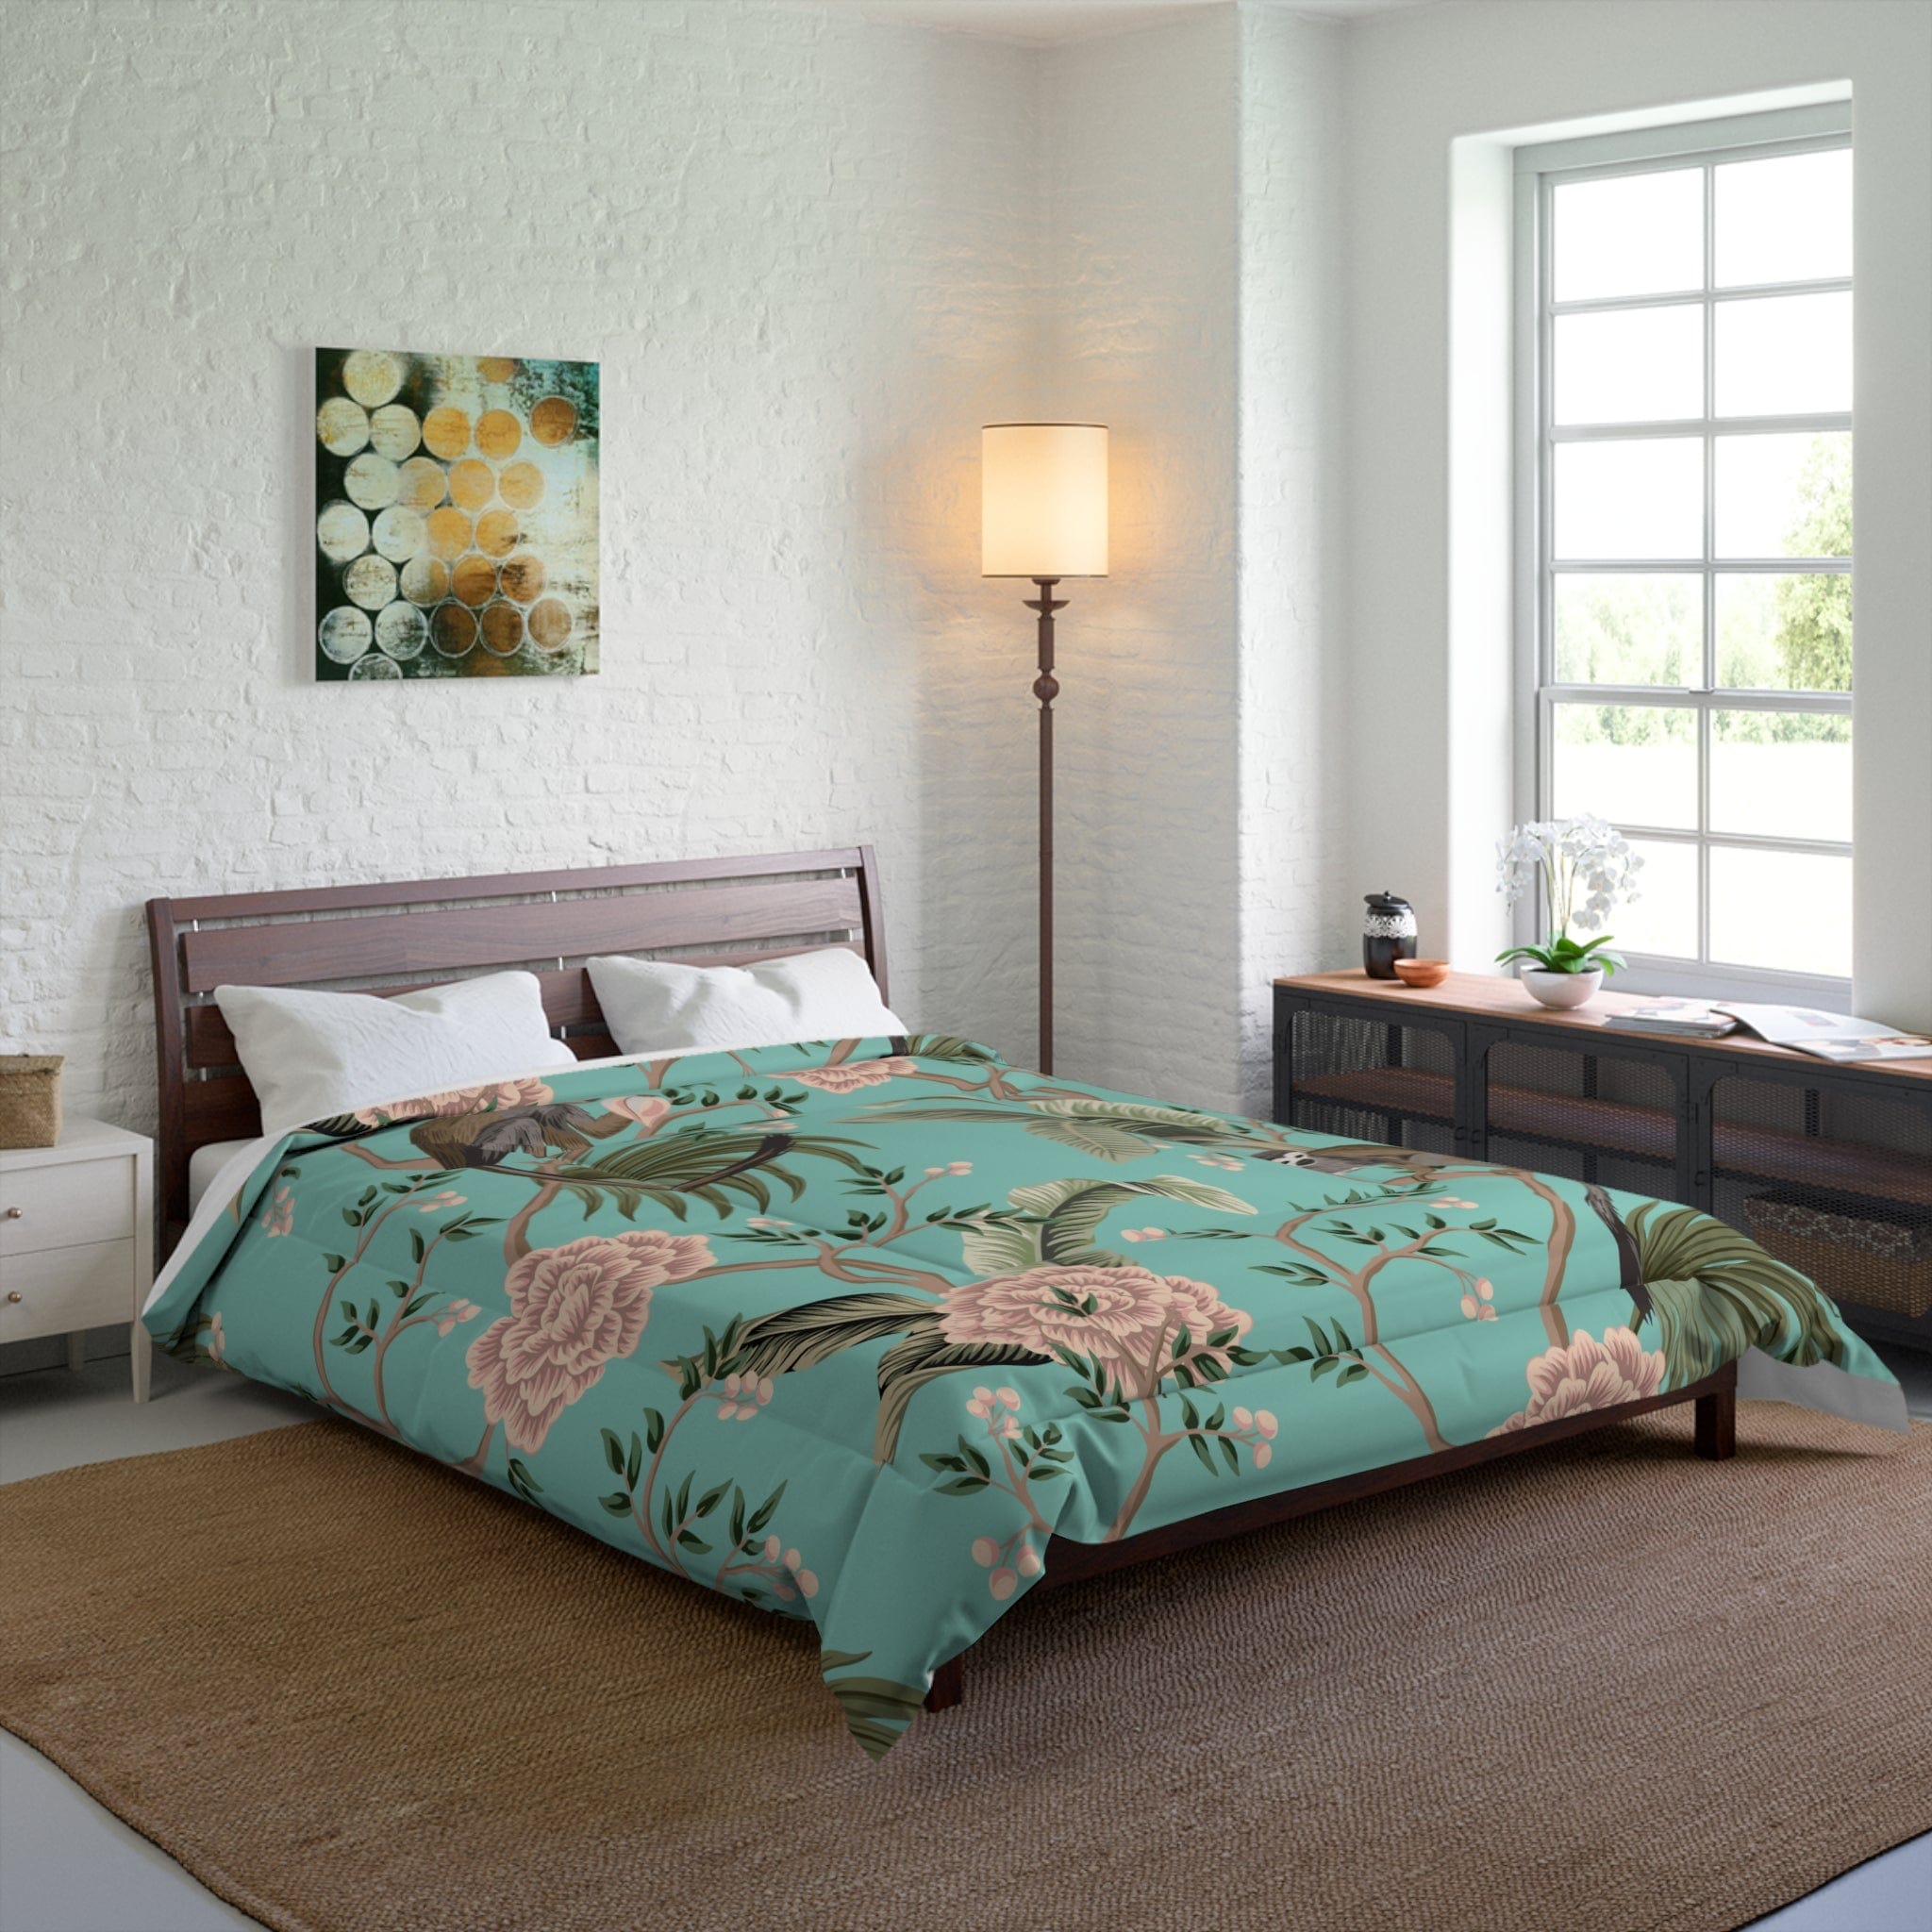 Kate McEnroe New York Chinoiserie Monkey Floral Comforter, Teal Pink Botanical BeddingComforters93189734320329781681